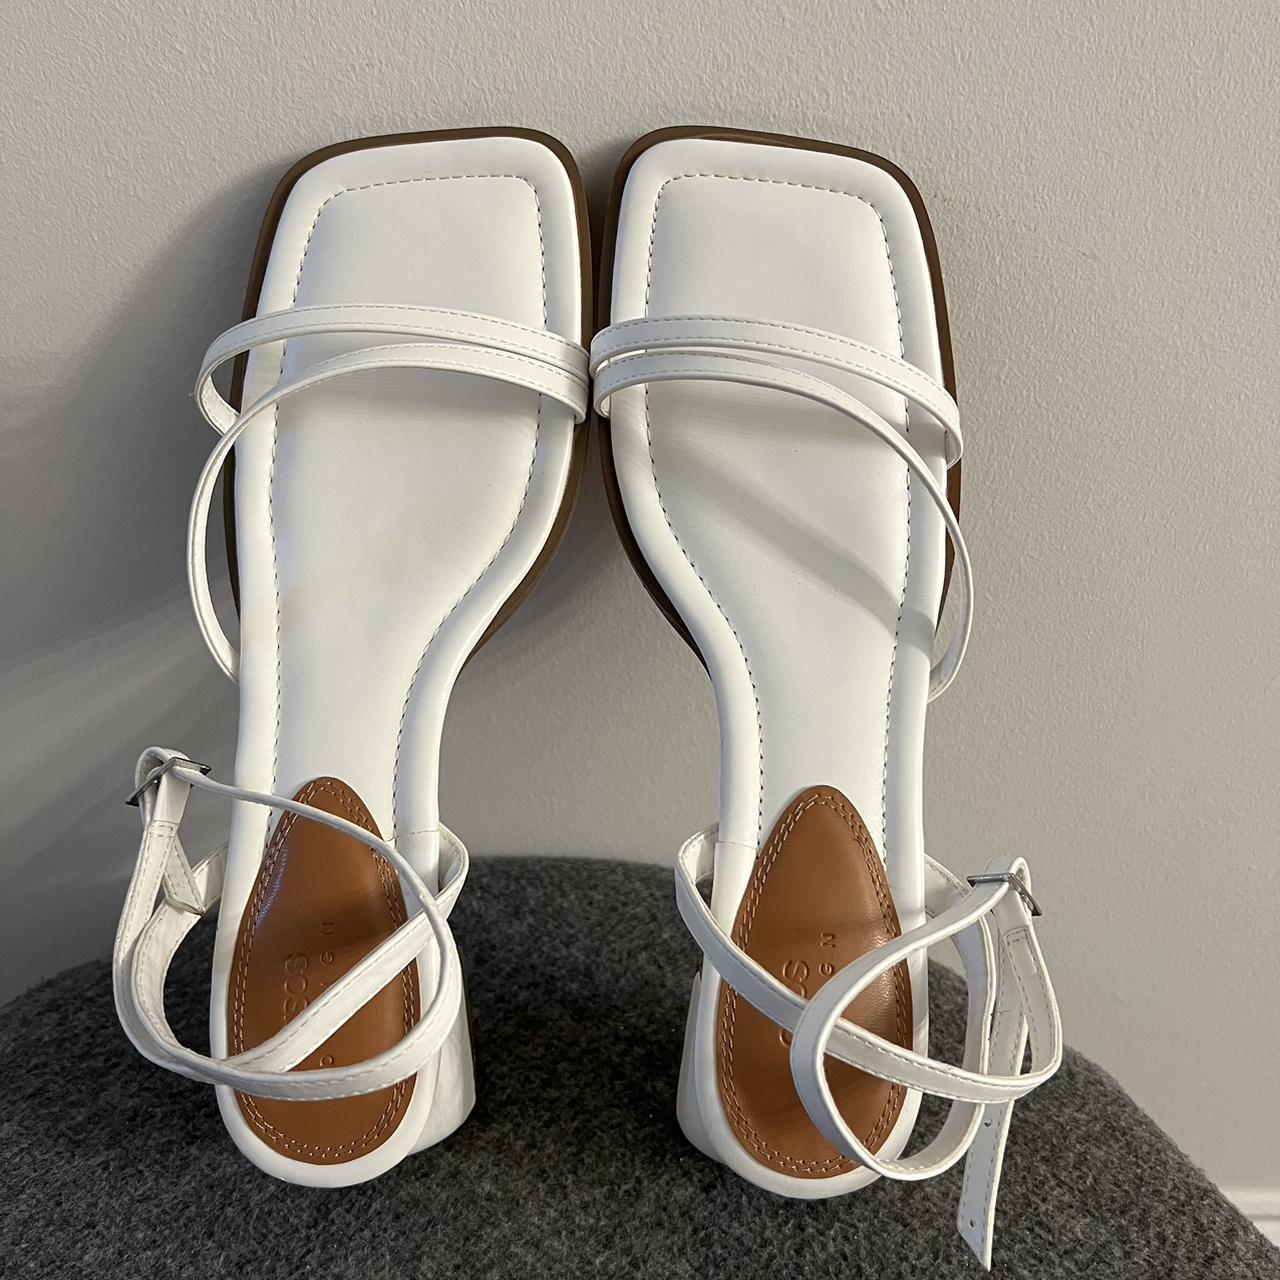 ASOS Women's White Sandals